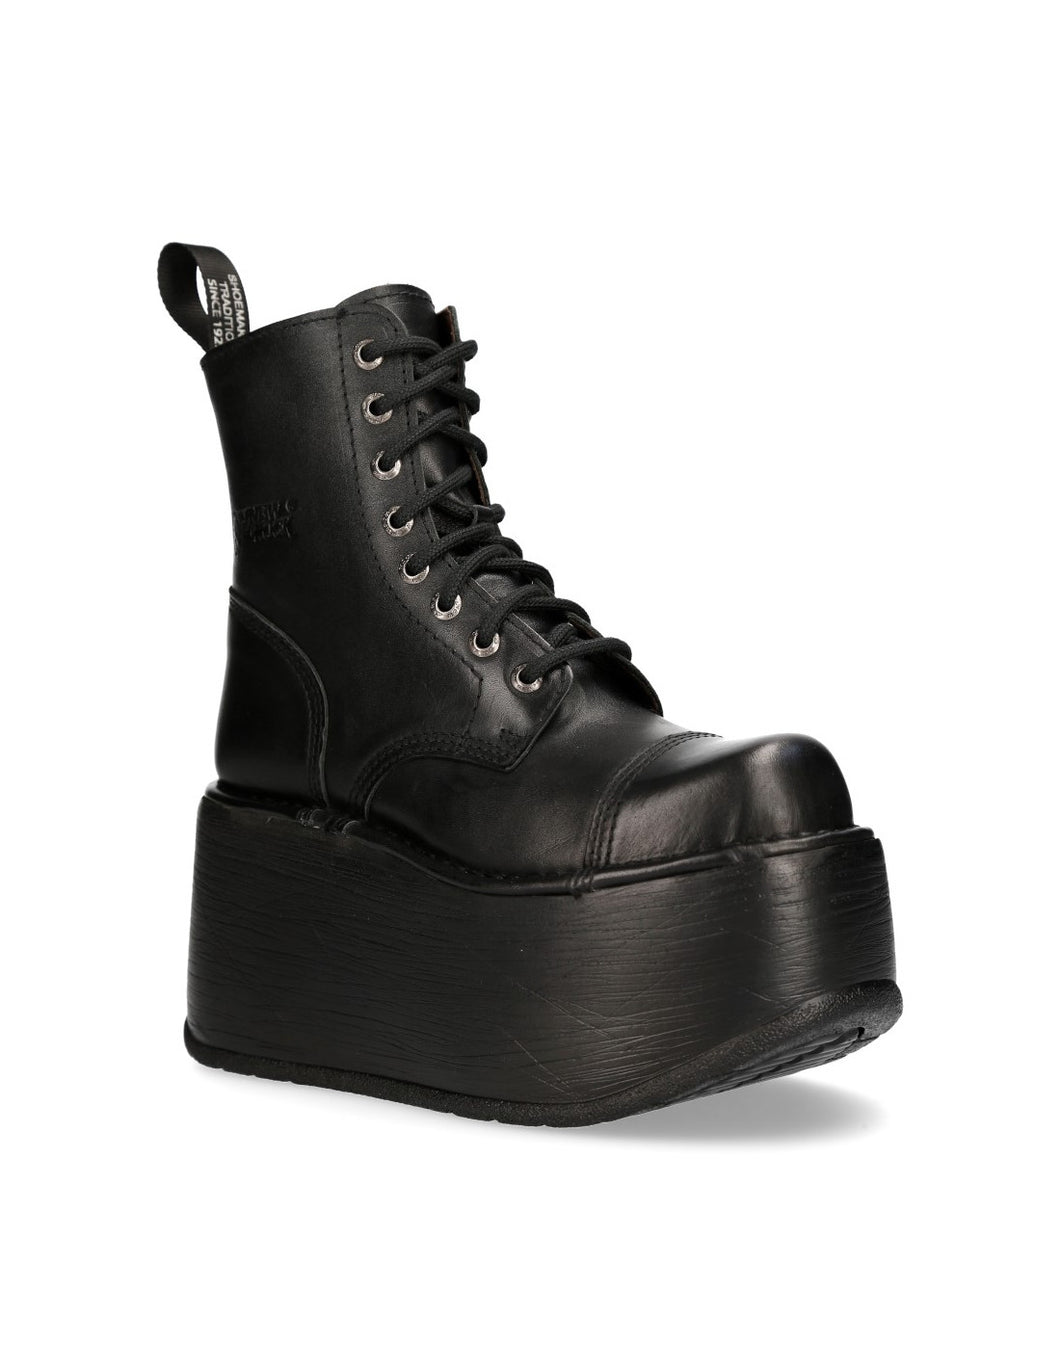 New Rock Schuhe Gothic Cyber Boots Plateauschuhe